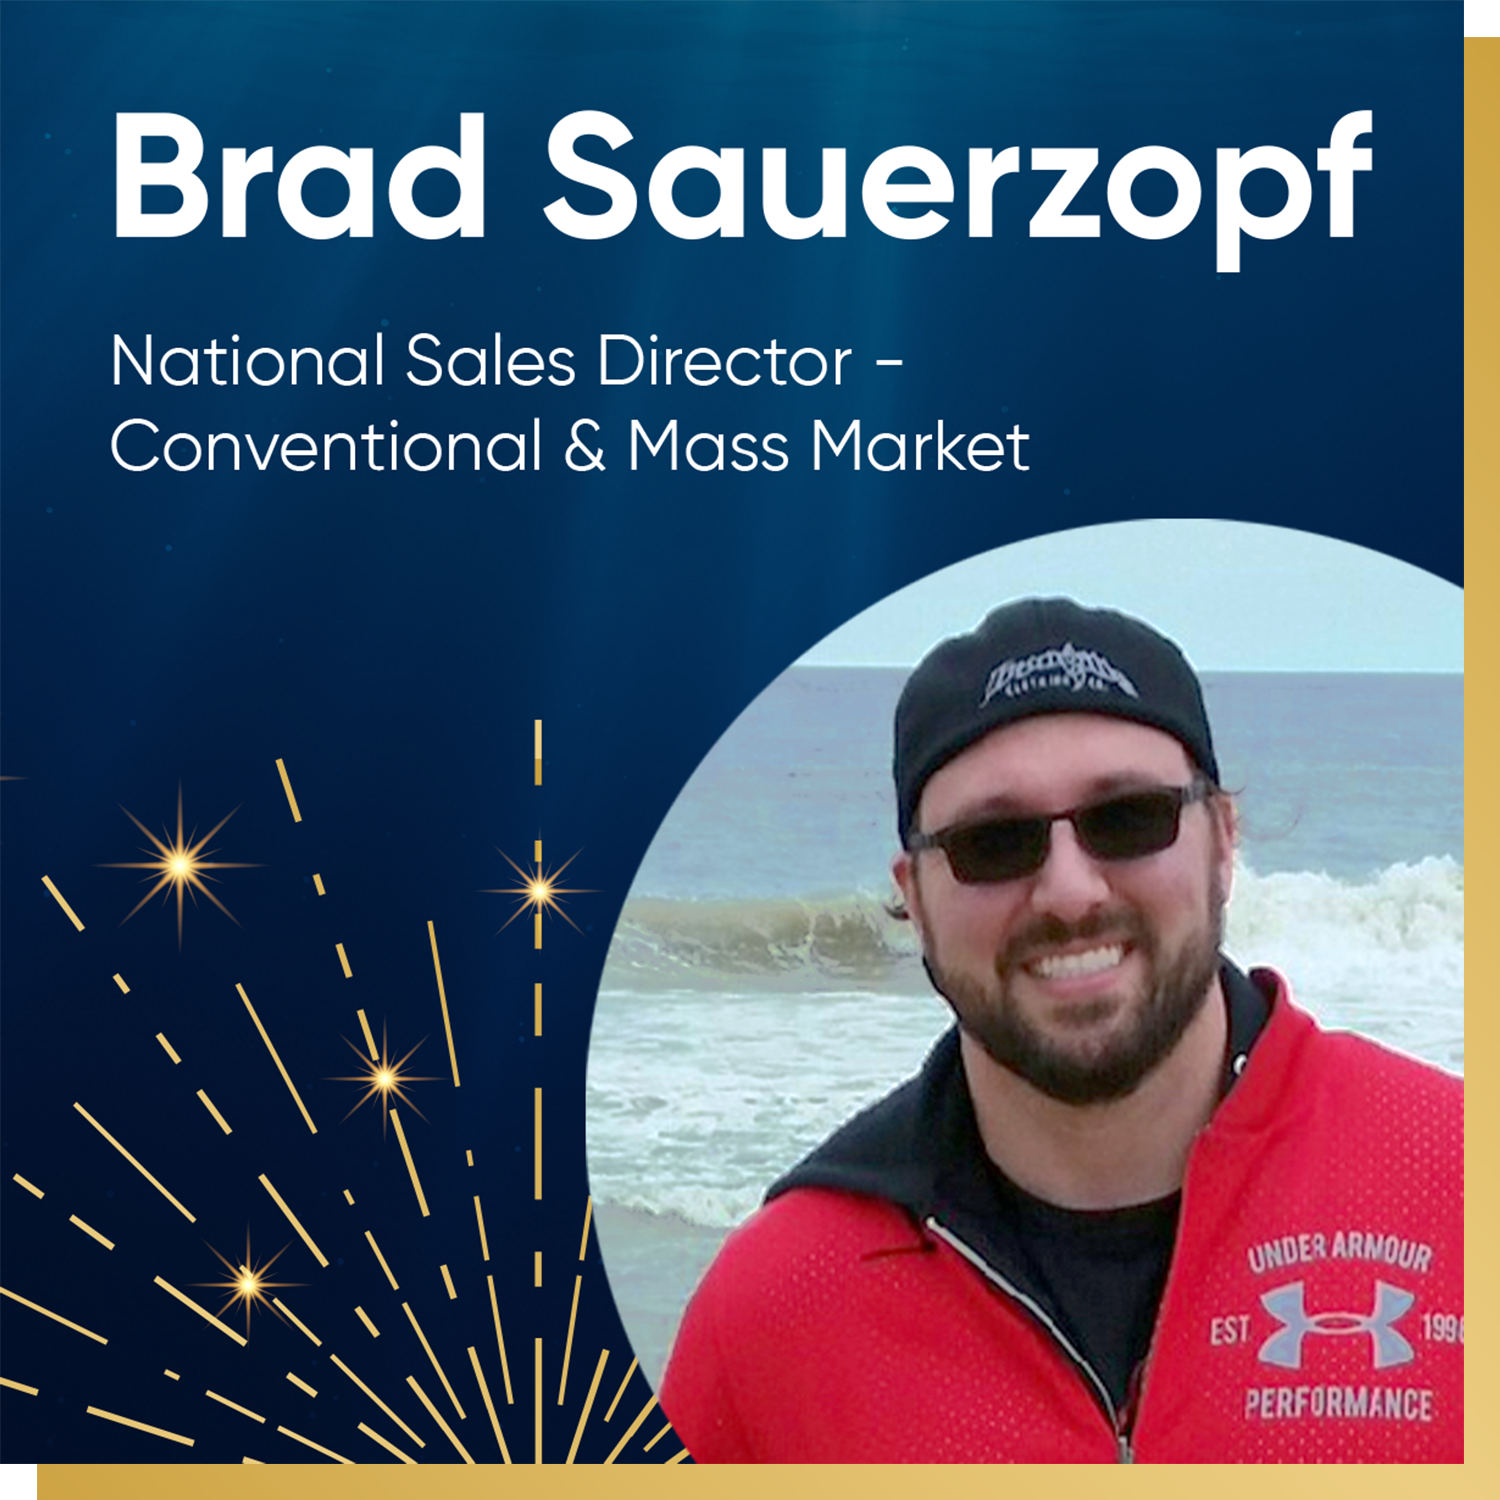 Employee Spotlight - Brad Sauerzopf, National Sales Director - Conventional & Mass Market, Wild Planet Foods